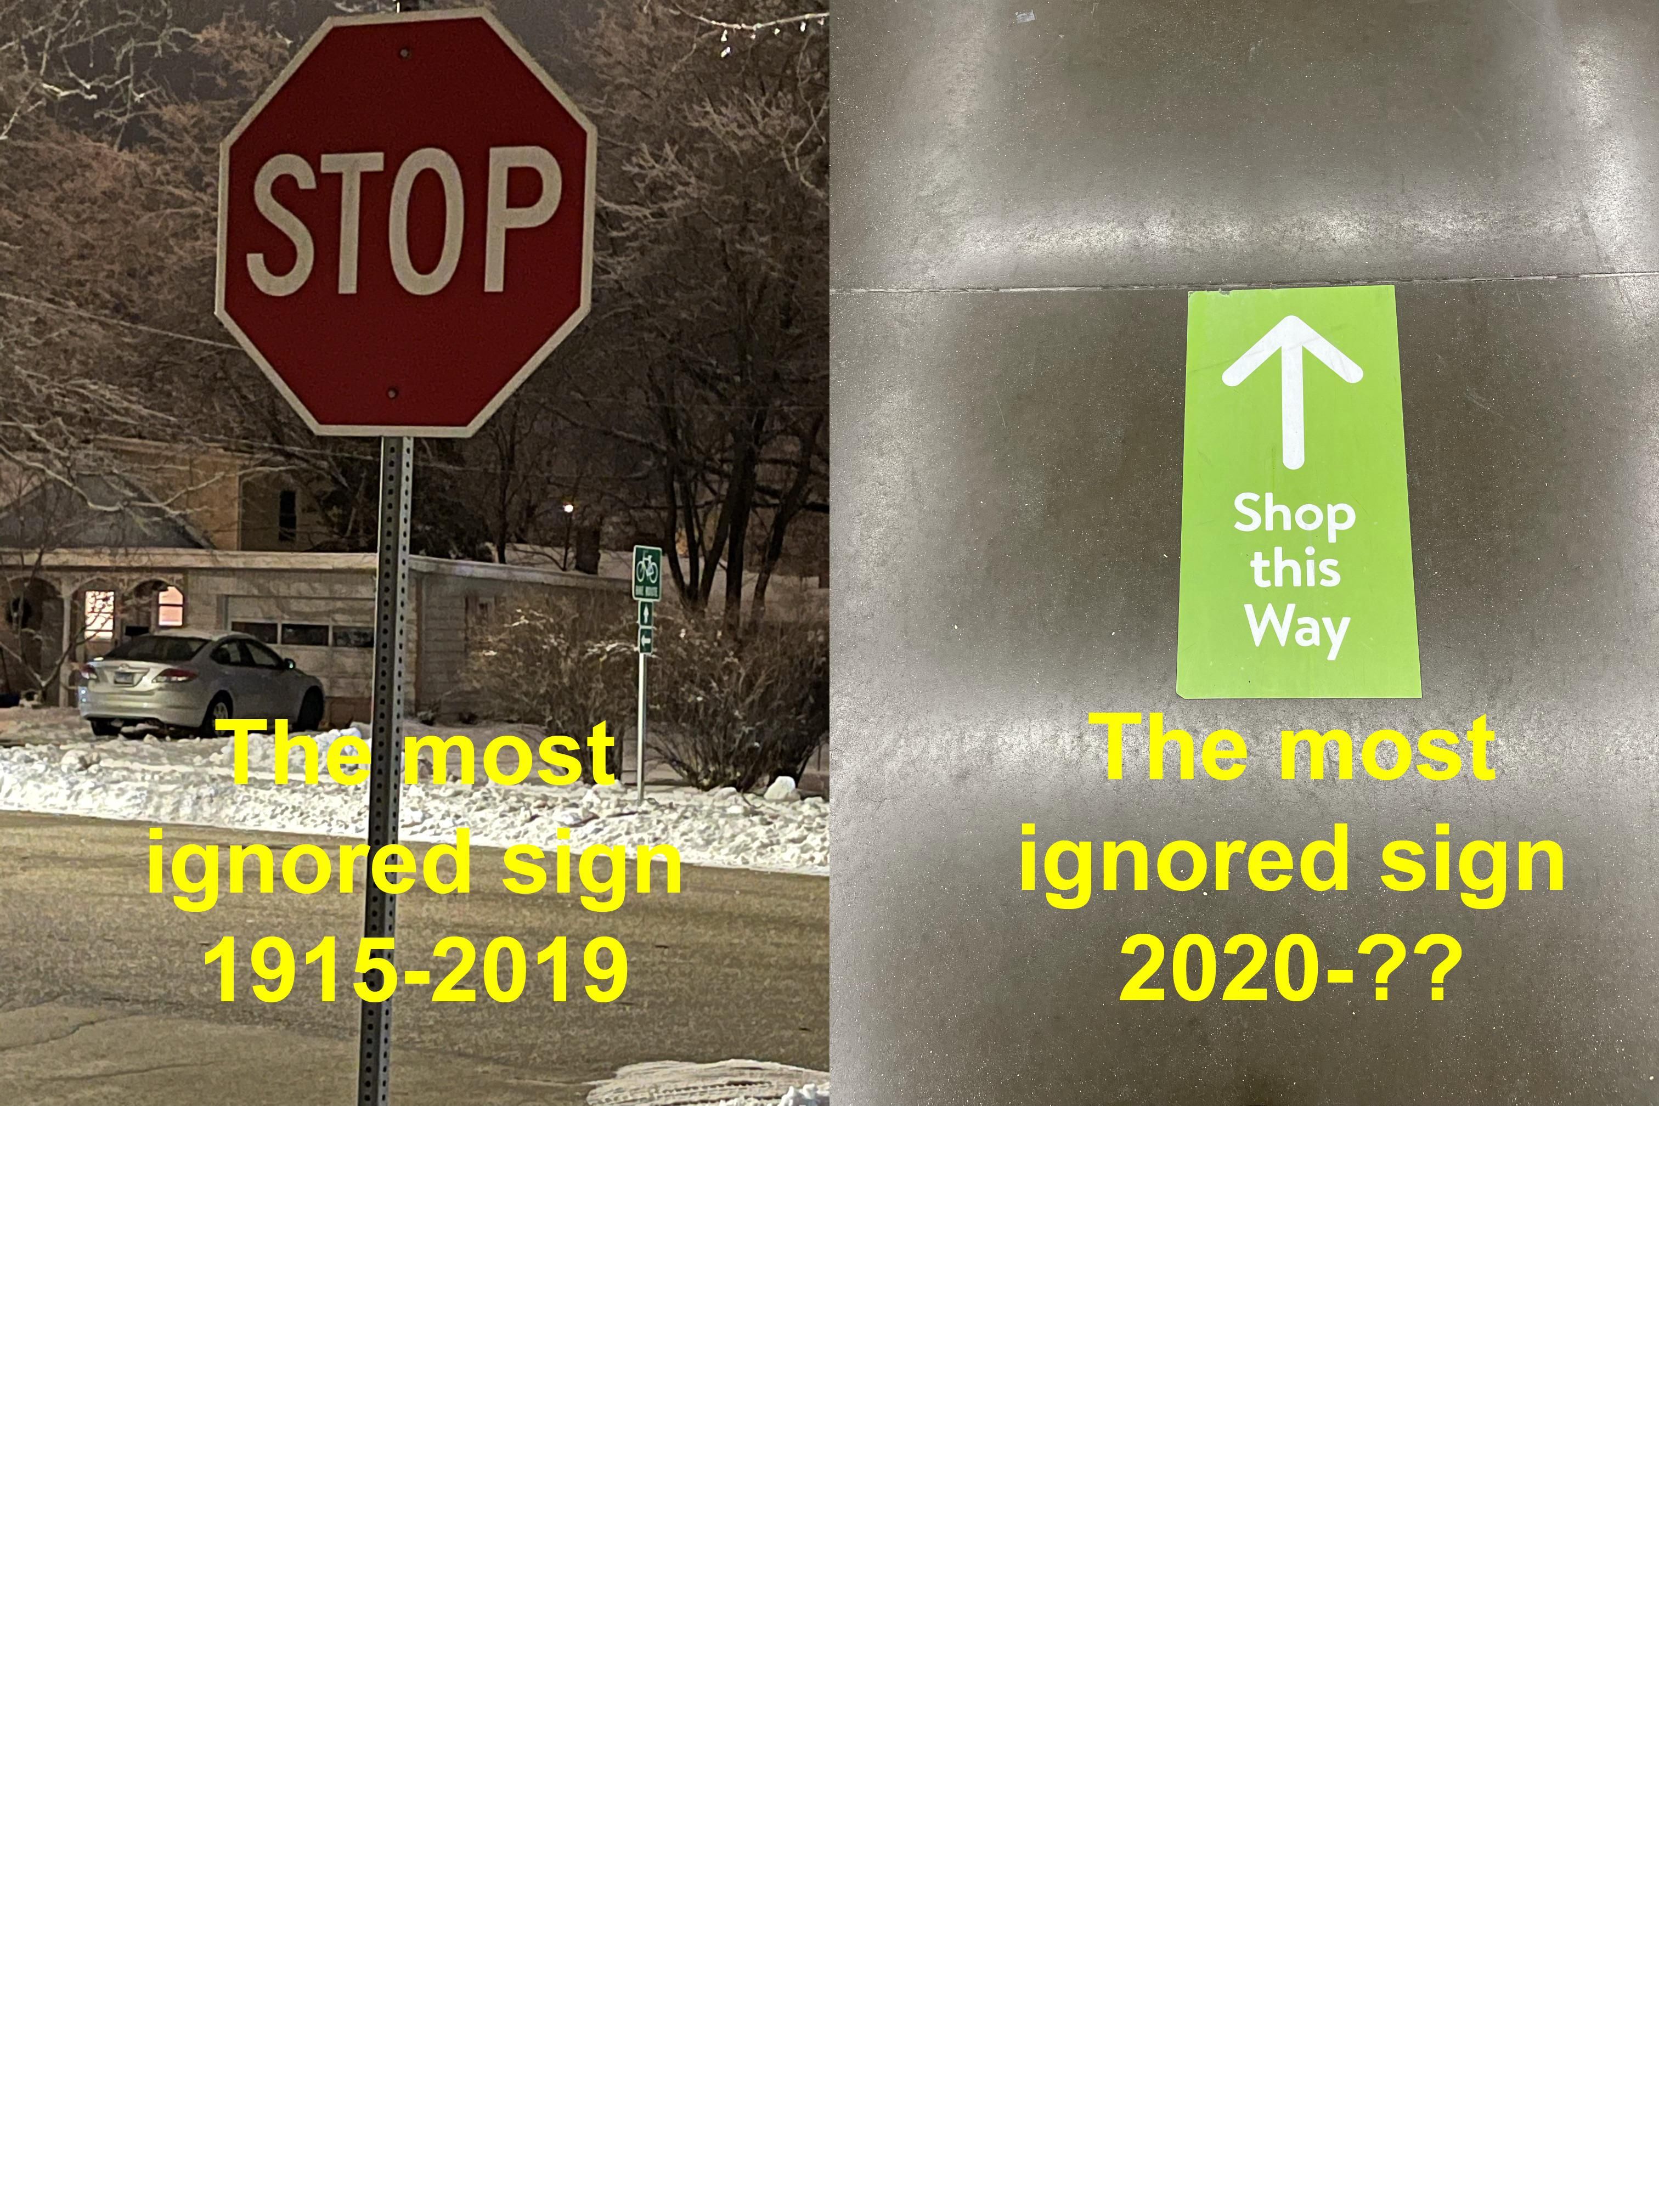 Ignoring signs...